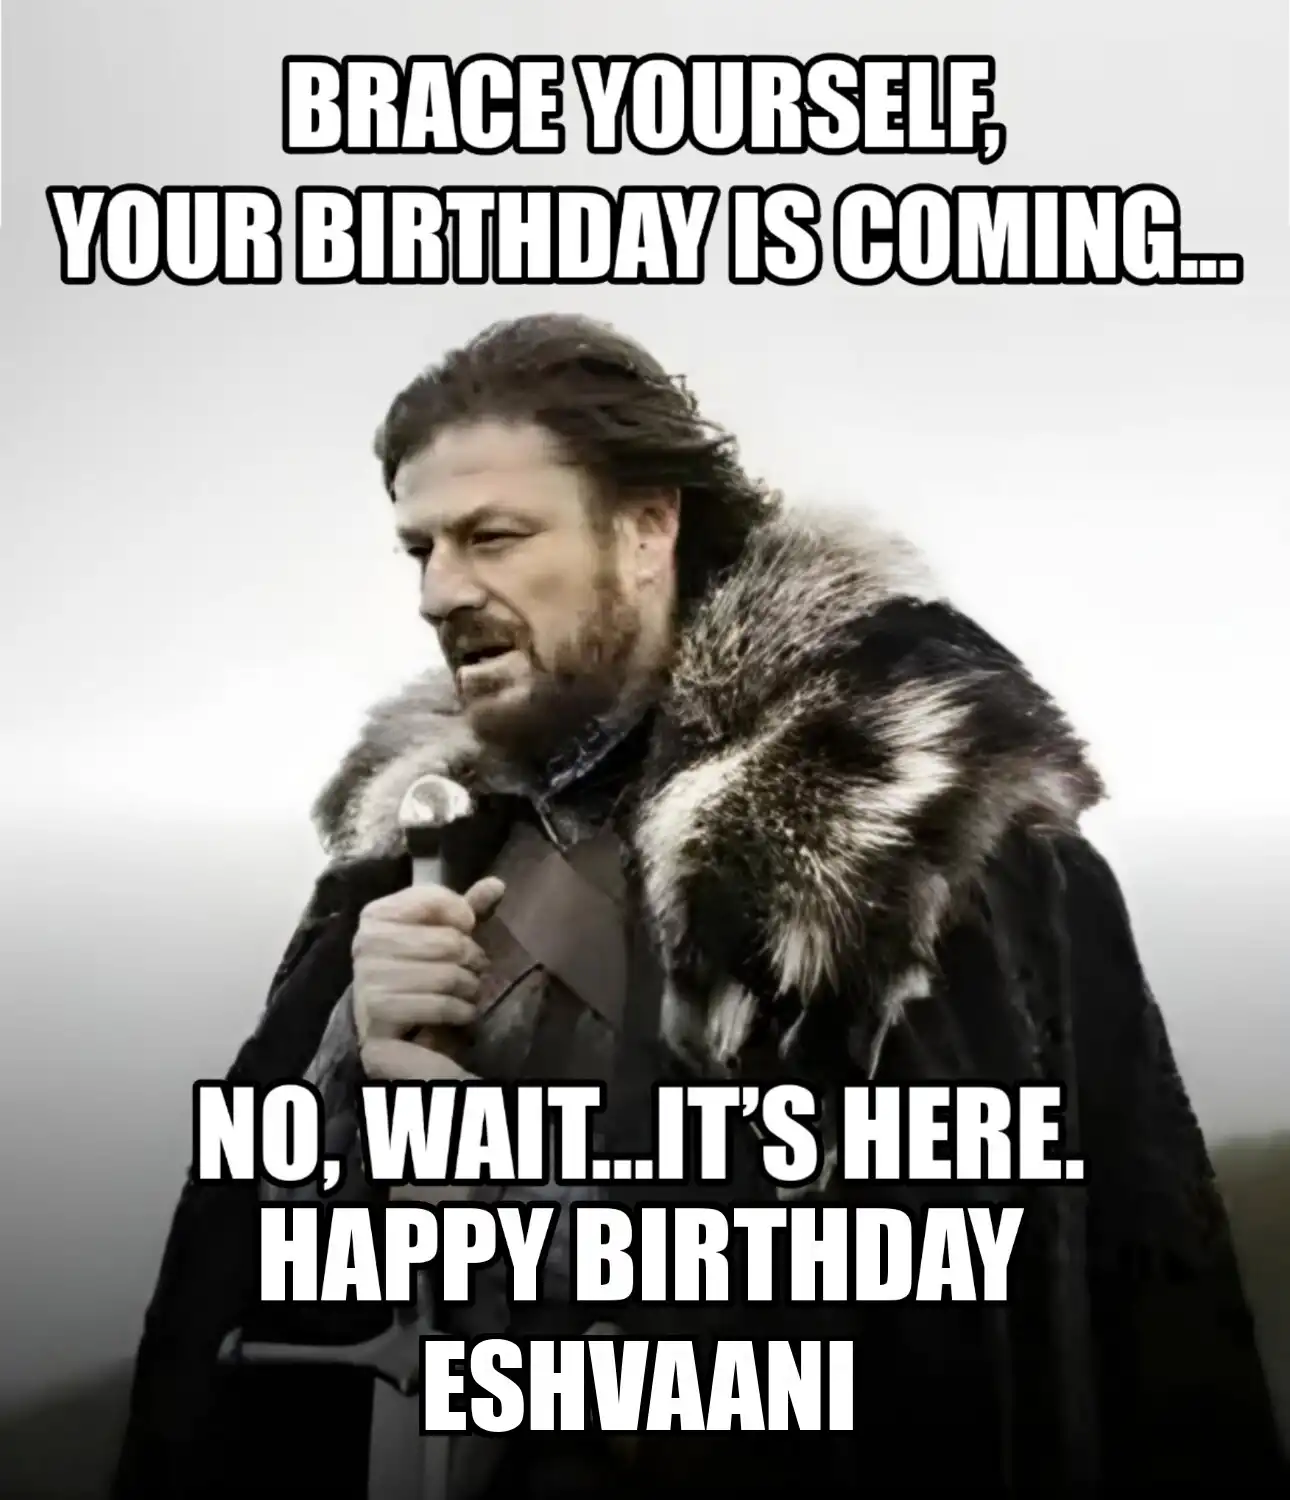 Happy Birthday Eshvaani Brace Yourself Your Birthday Is Coming Meme